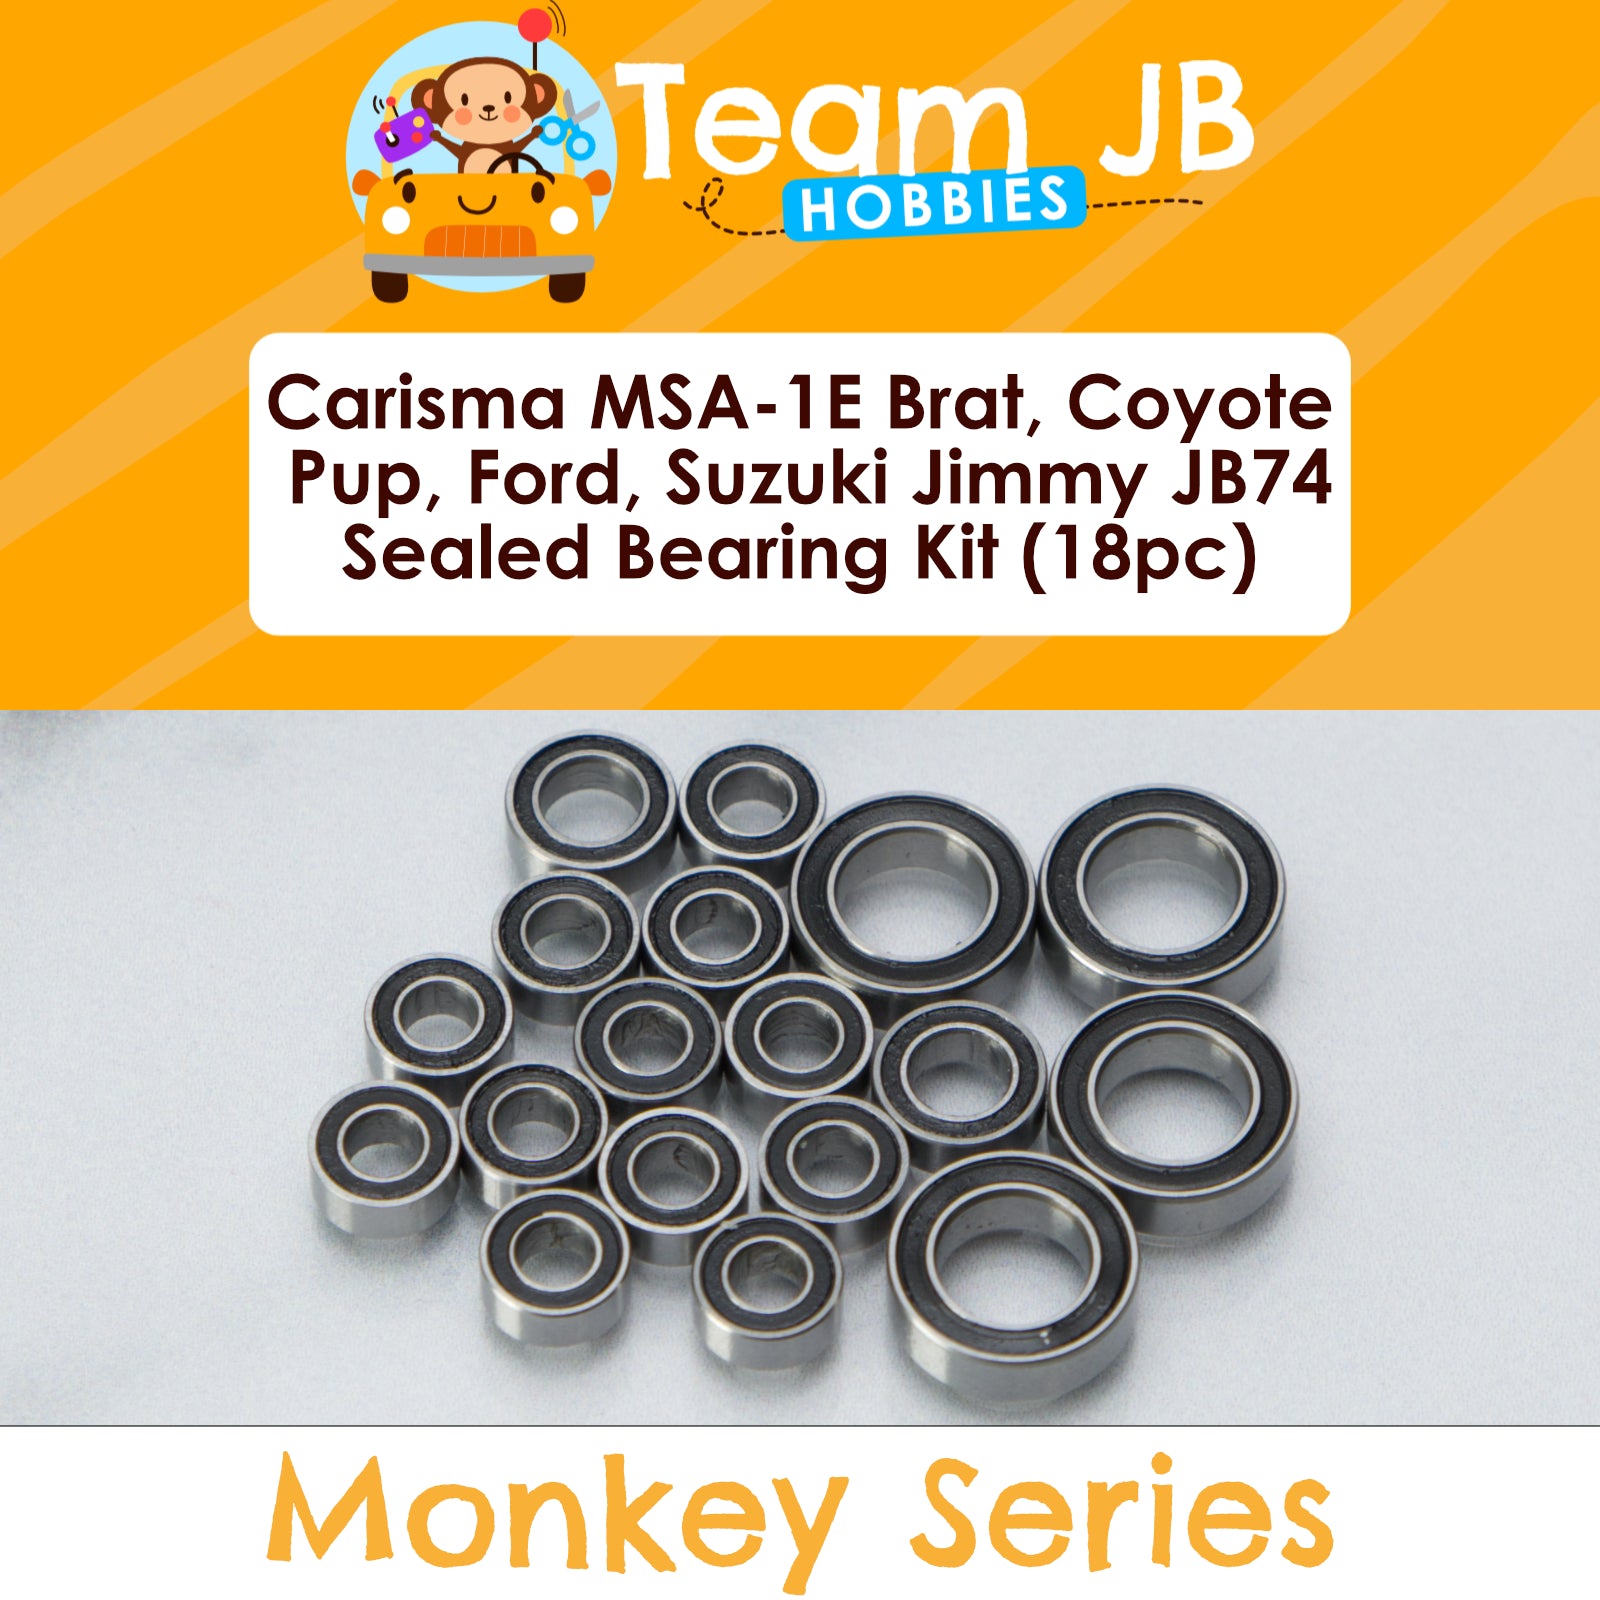 Carisma MSA-1E Brat, Coyote Pup, Ford, Suzuki Jimmy JB74 RTR - Sealed Bearing Kit